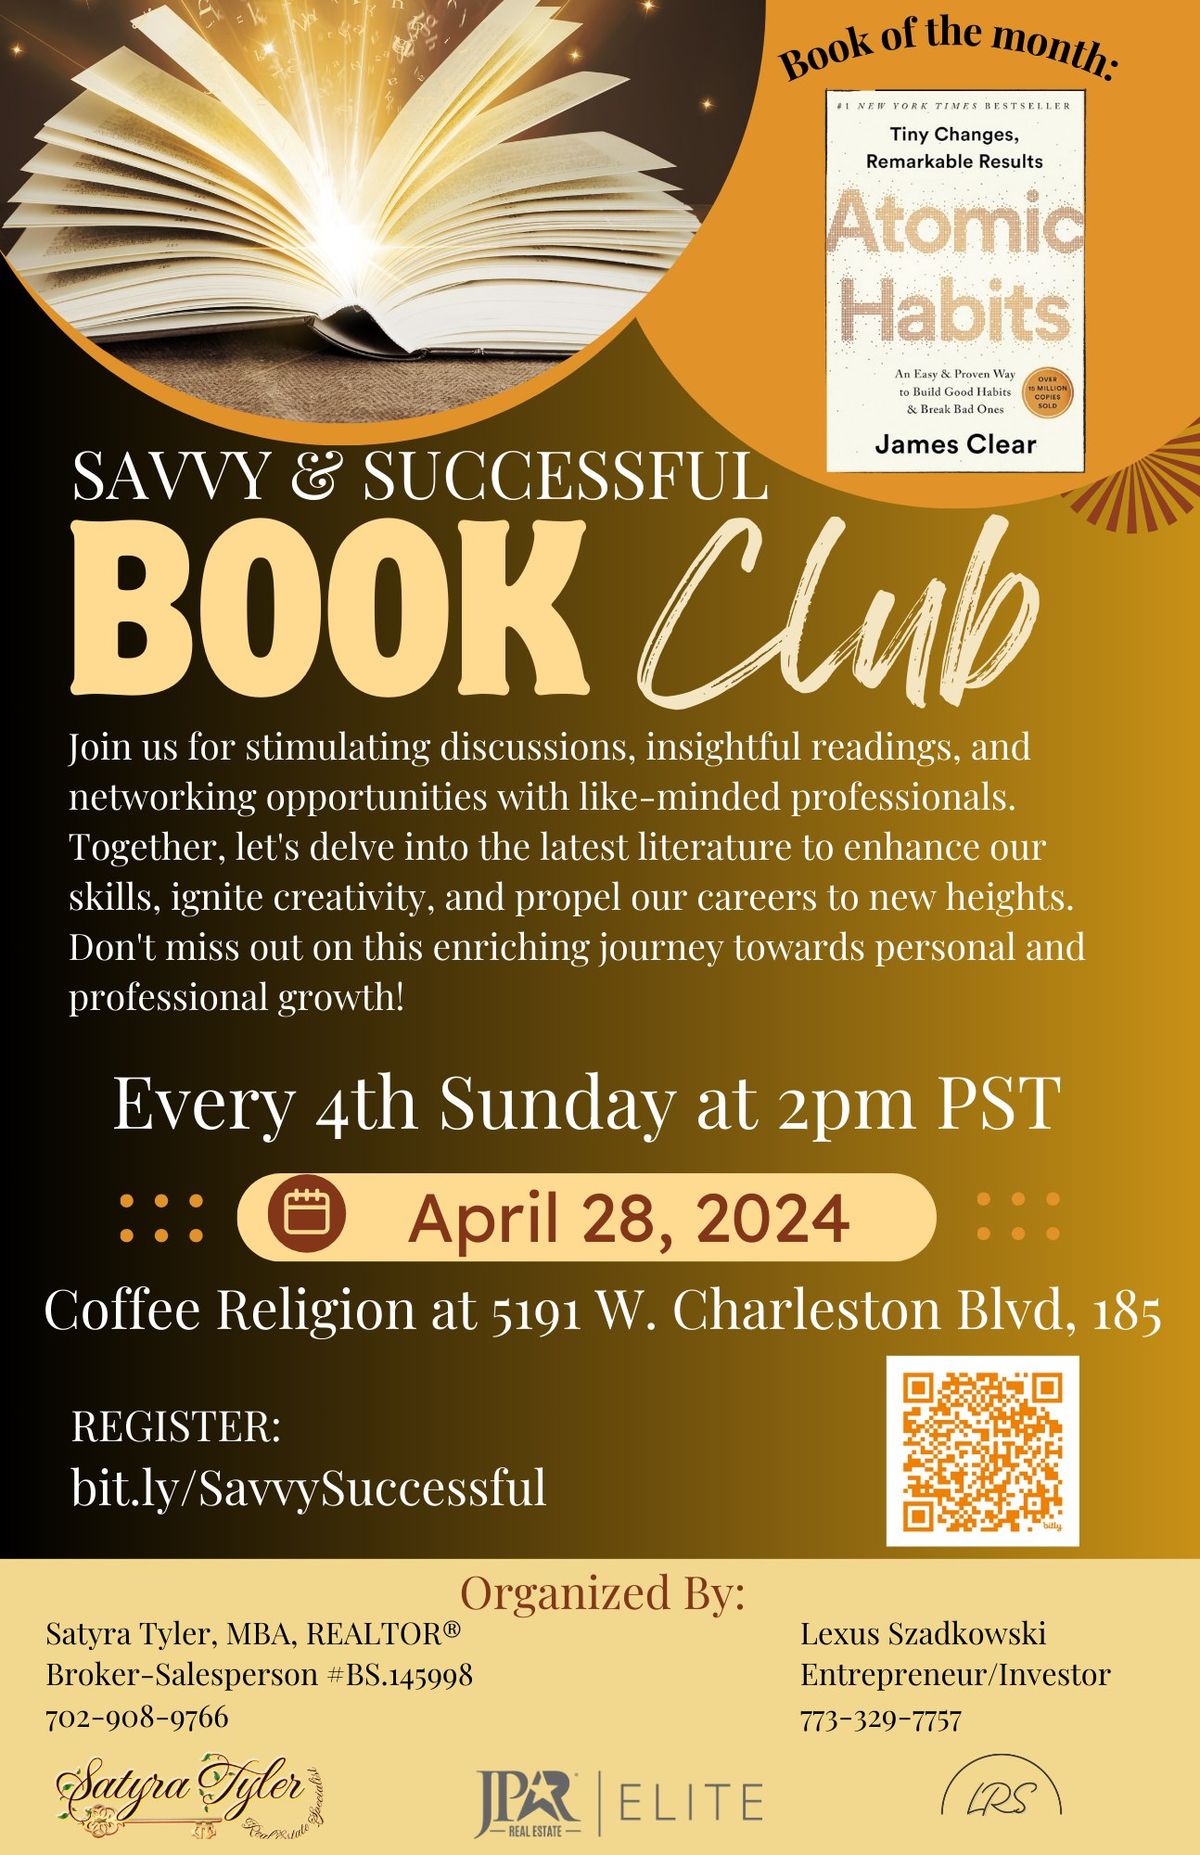 Savvy & Successful Book Club